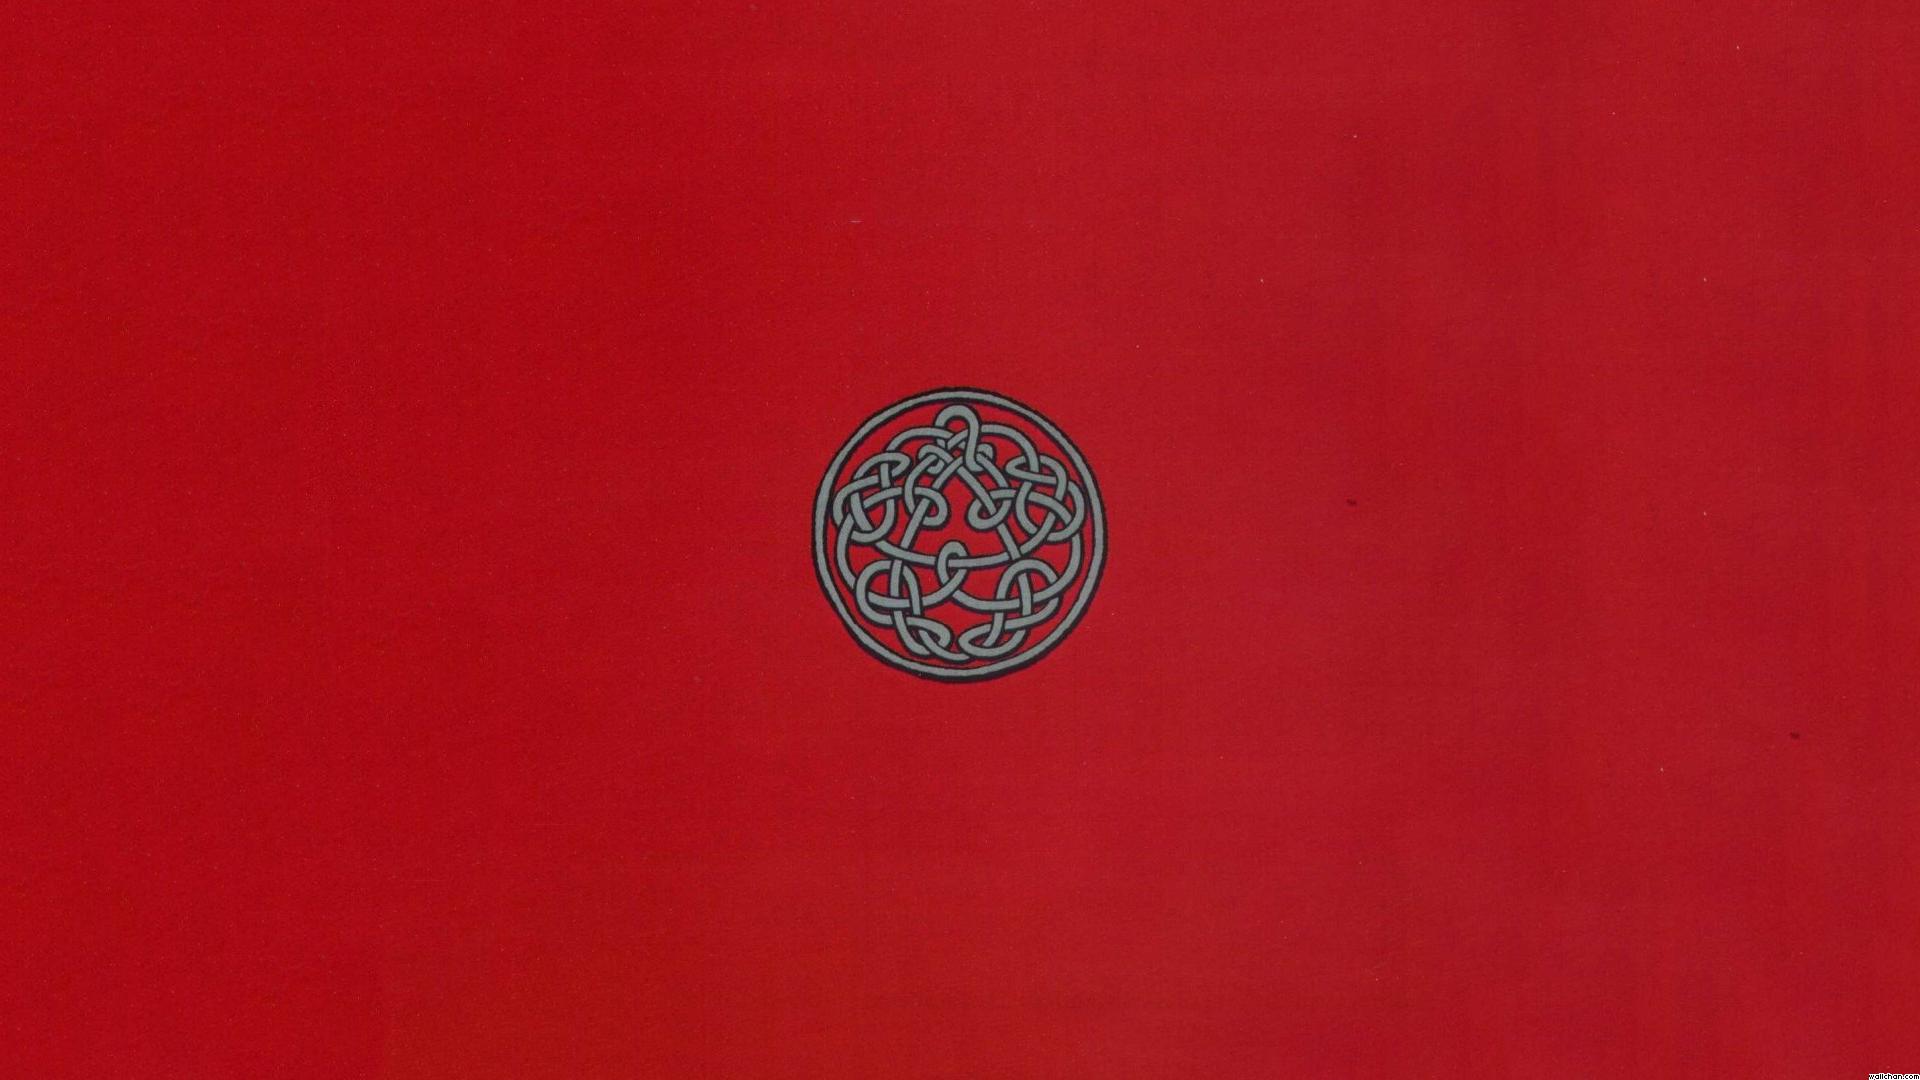 King Crimson Wallpapers Top Free King Crimson Backgrounds